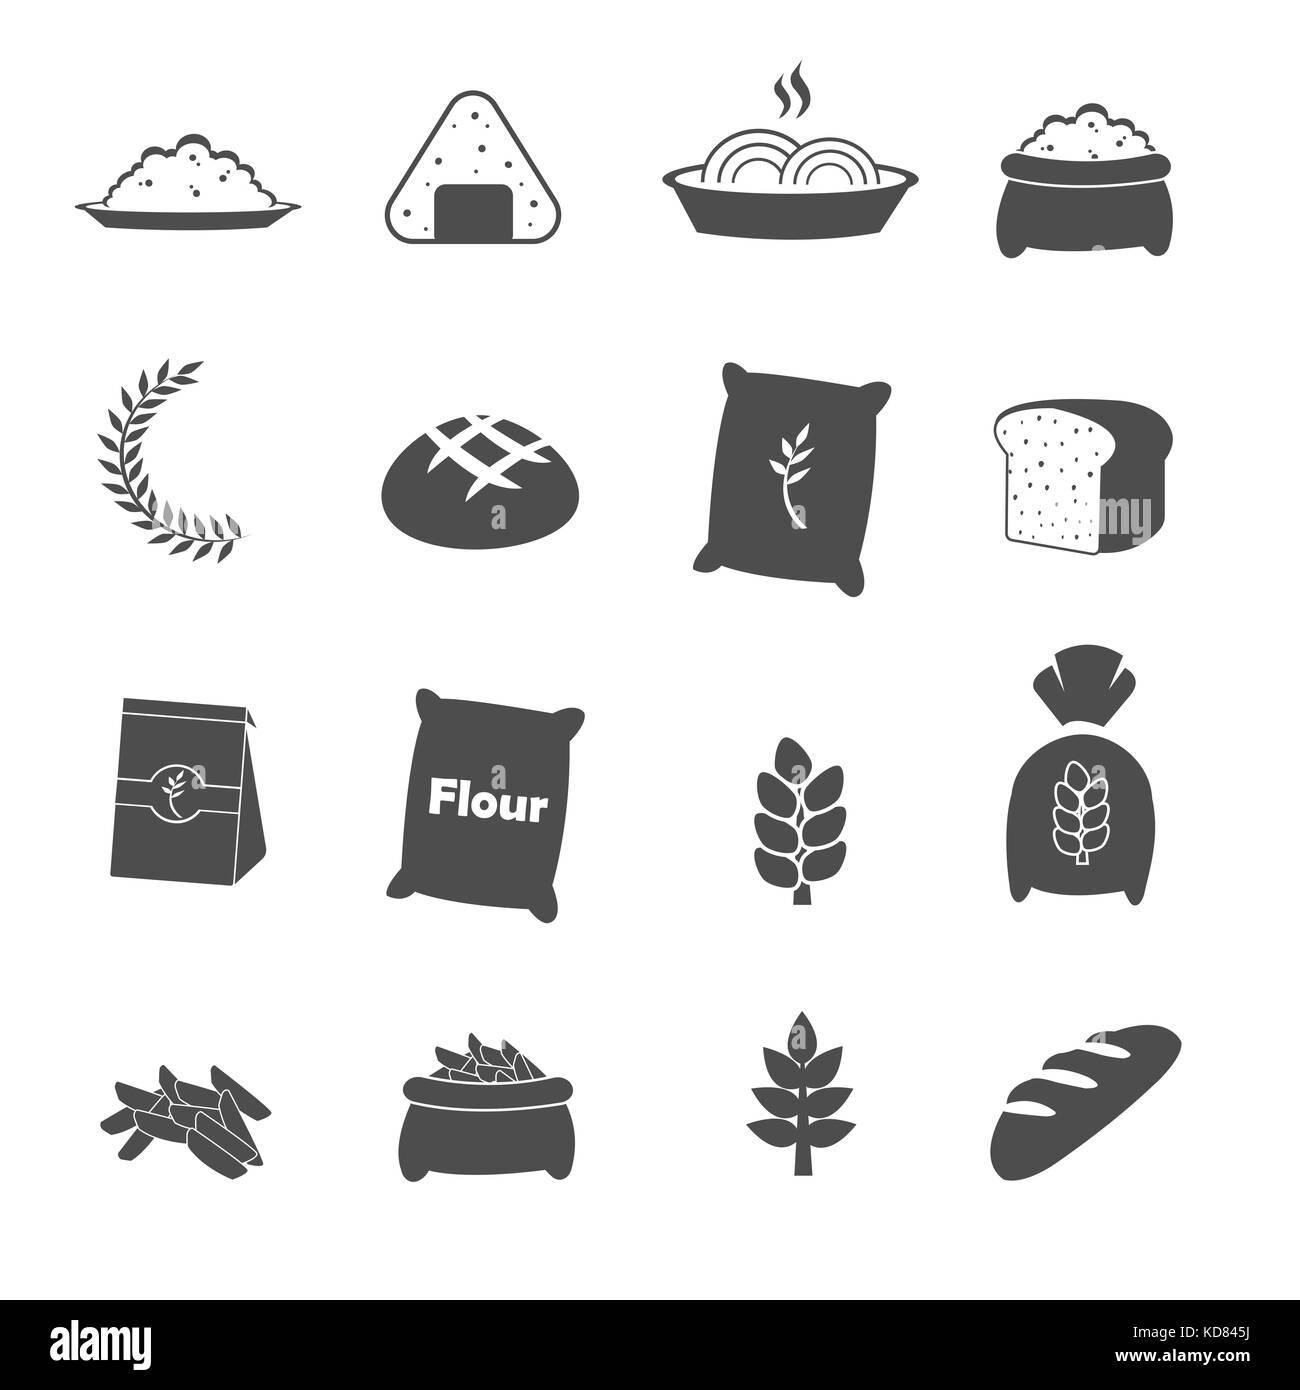 rice icons set vector Stock Photo